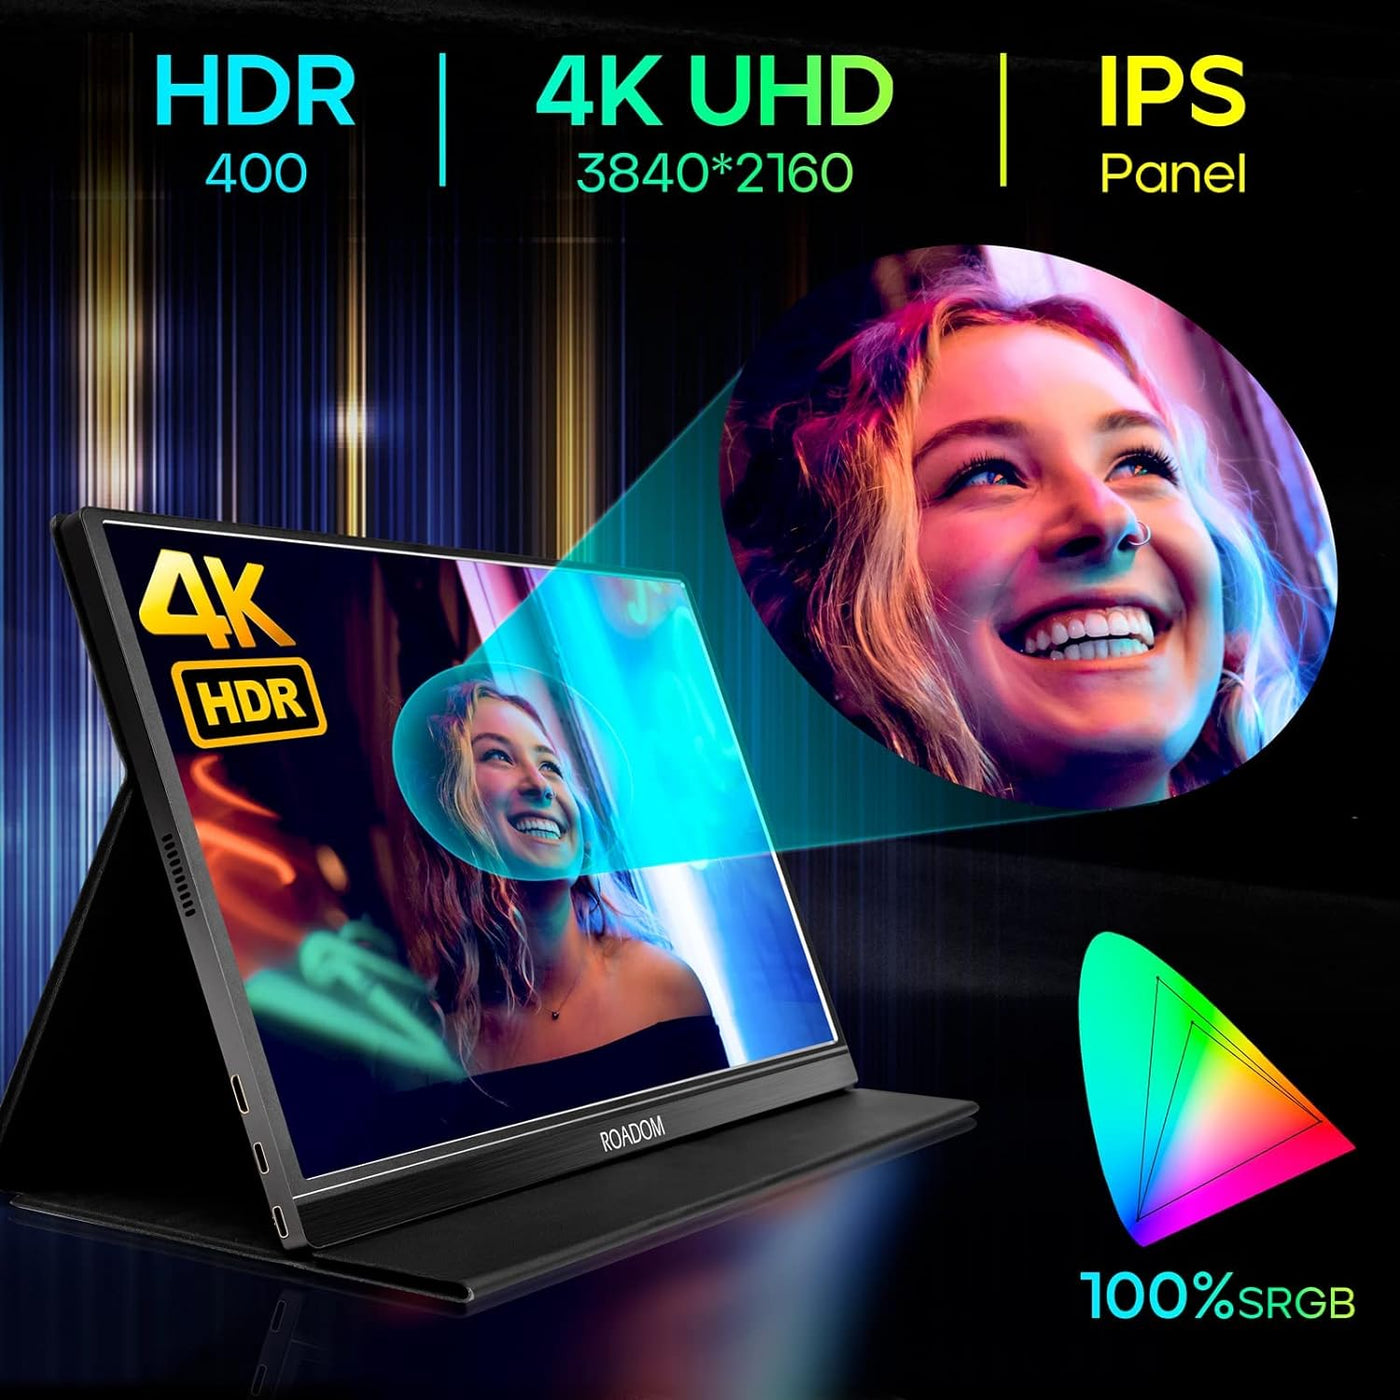 ROADOM 4k Portable Monitor,15.6'' IPS Ultra HD 3840x2160,100% Adobe RGB - $155